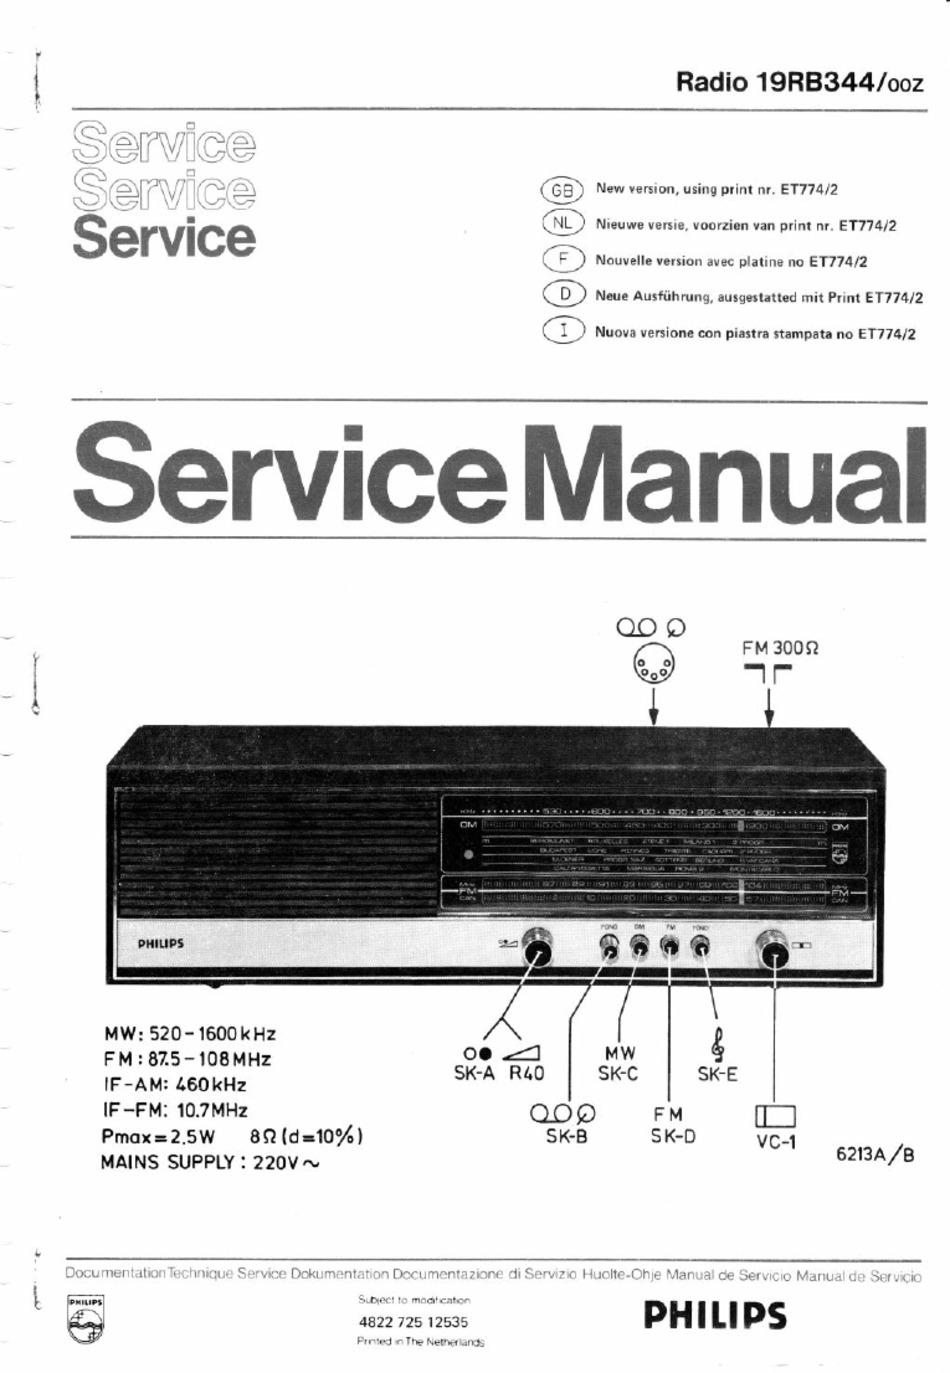 Service Manual-Anleitung für Philips B2 D14 U,Philetta Spezial 214 